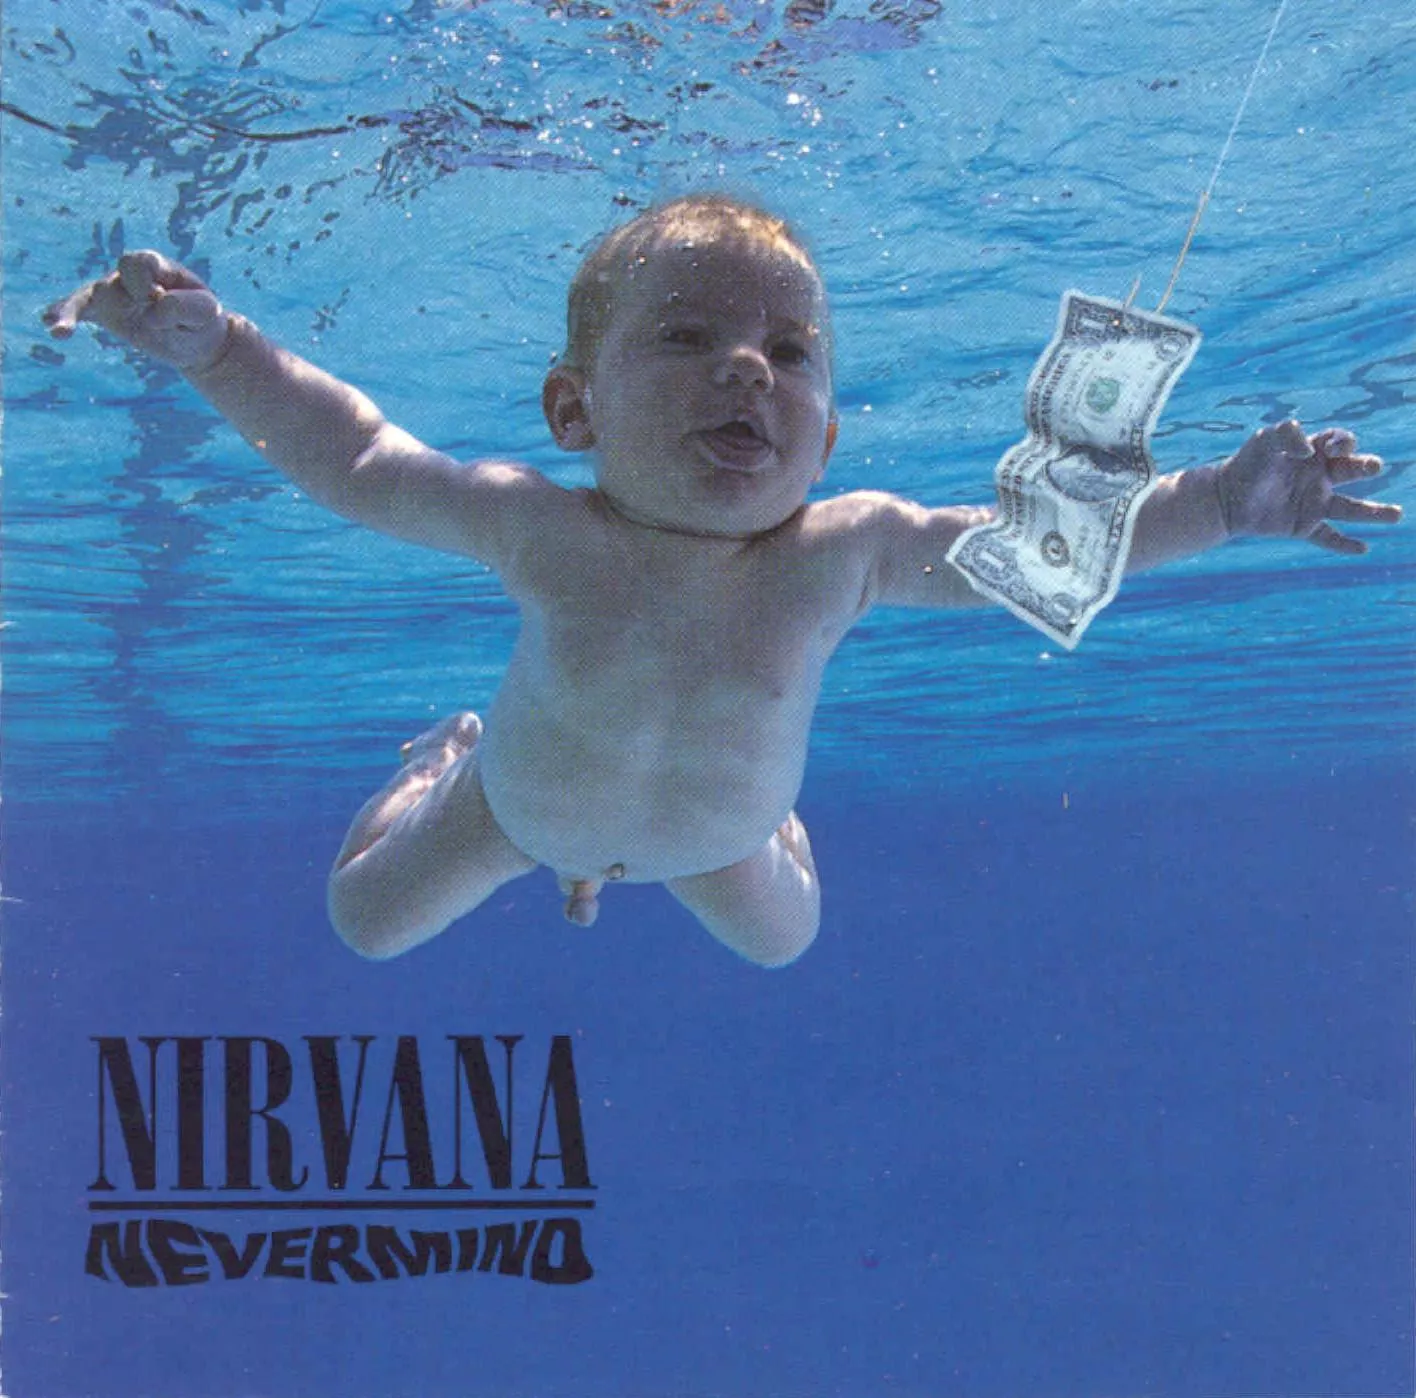 Eksklusive Nirvana-fotos sat til salg